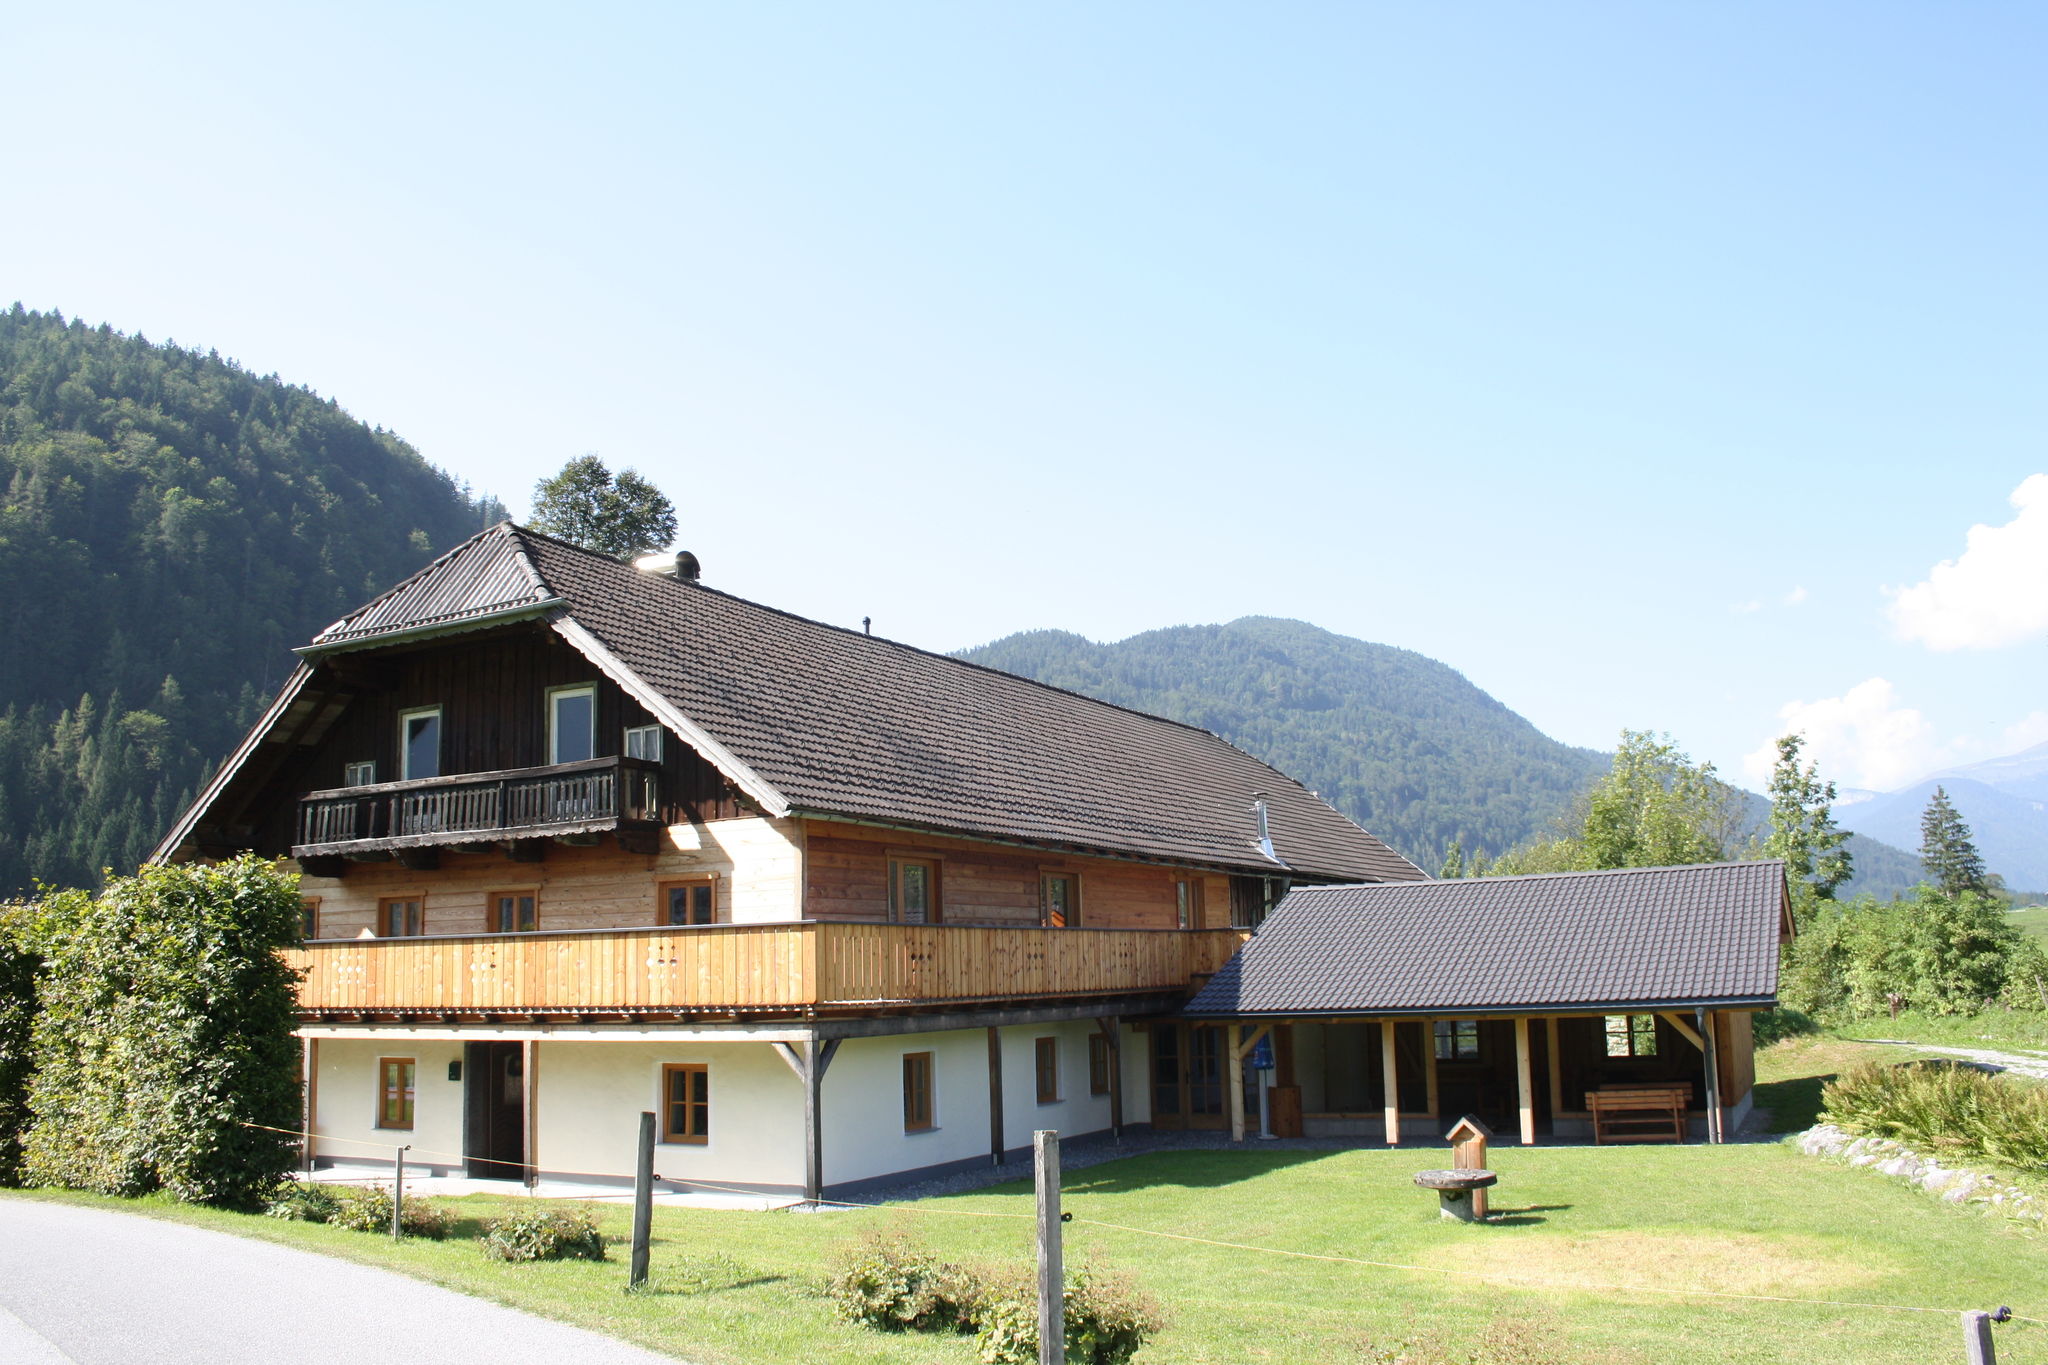 Renovated Farmhouse in Abtenau with Garden